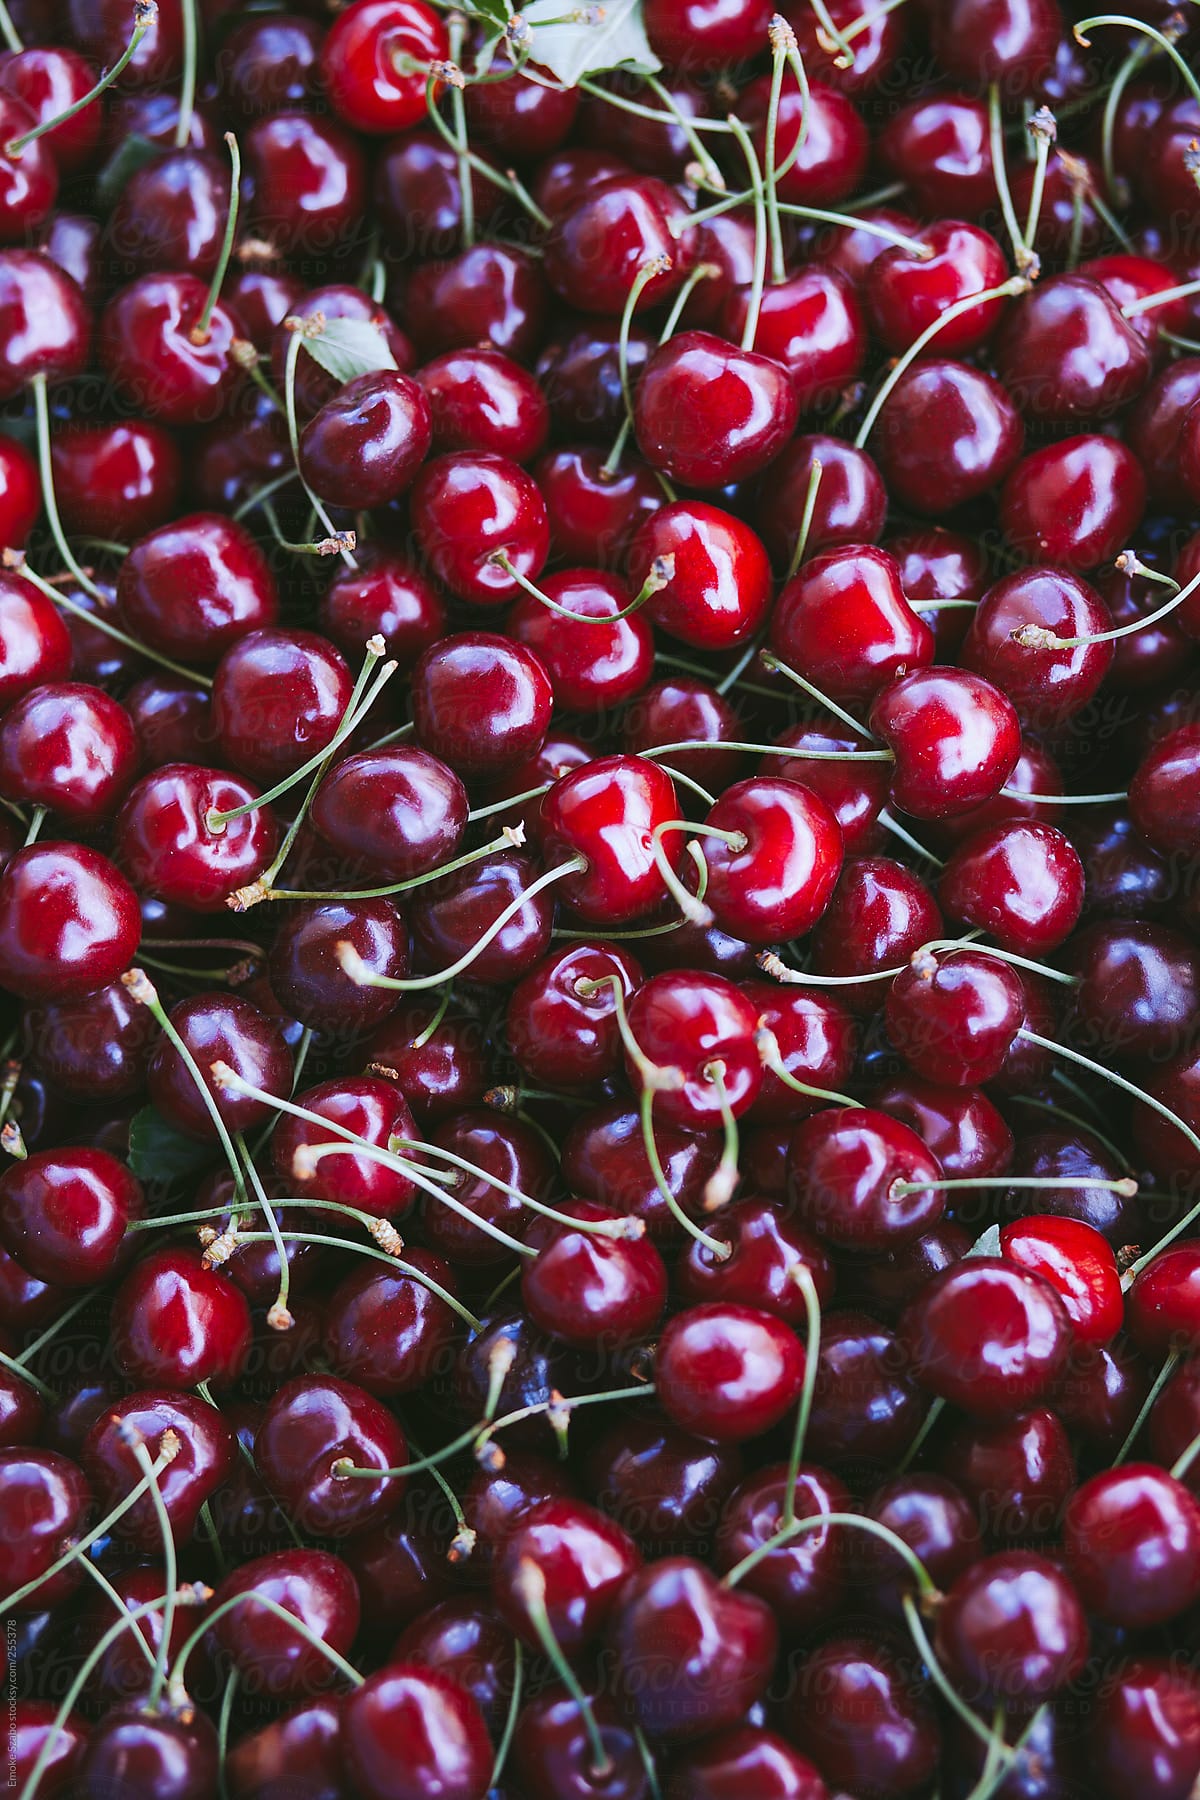 Cherry background